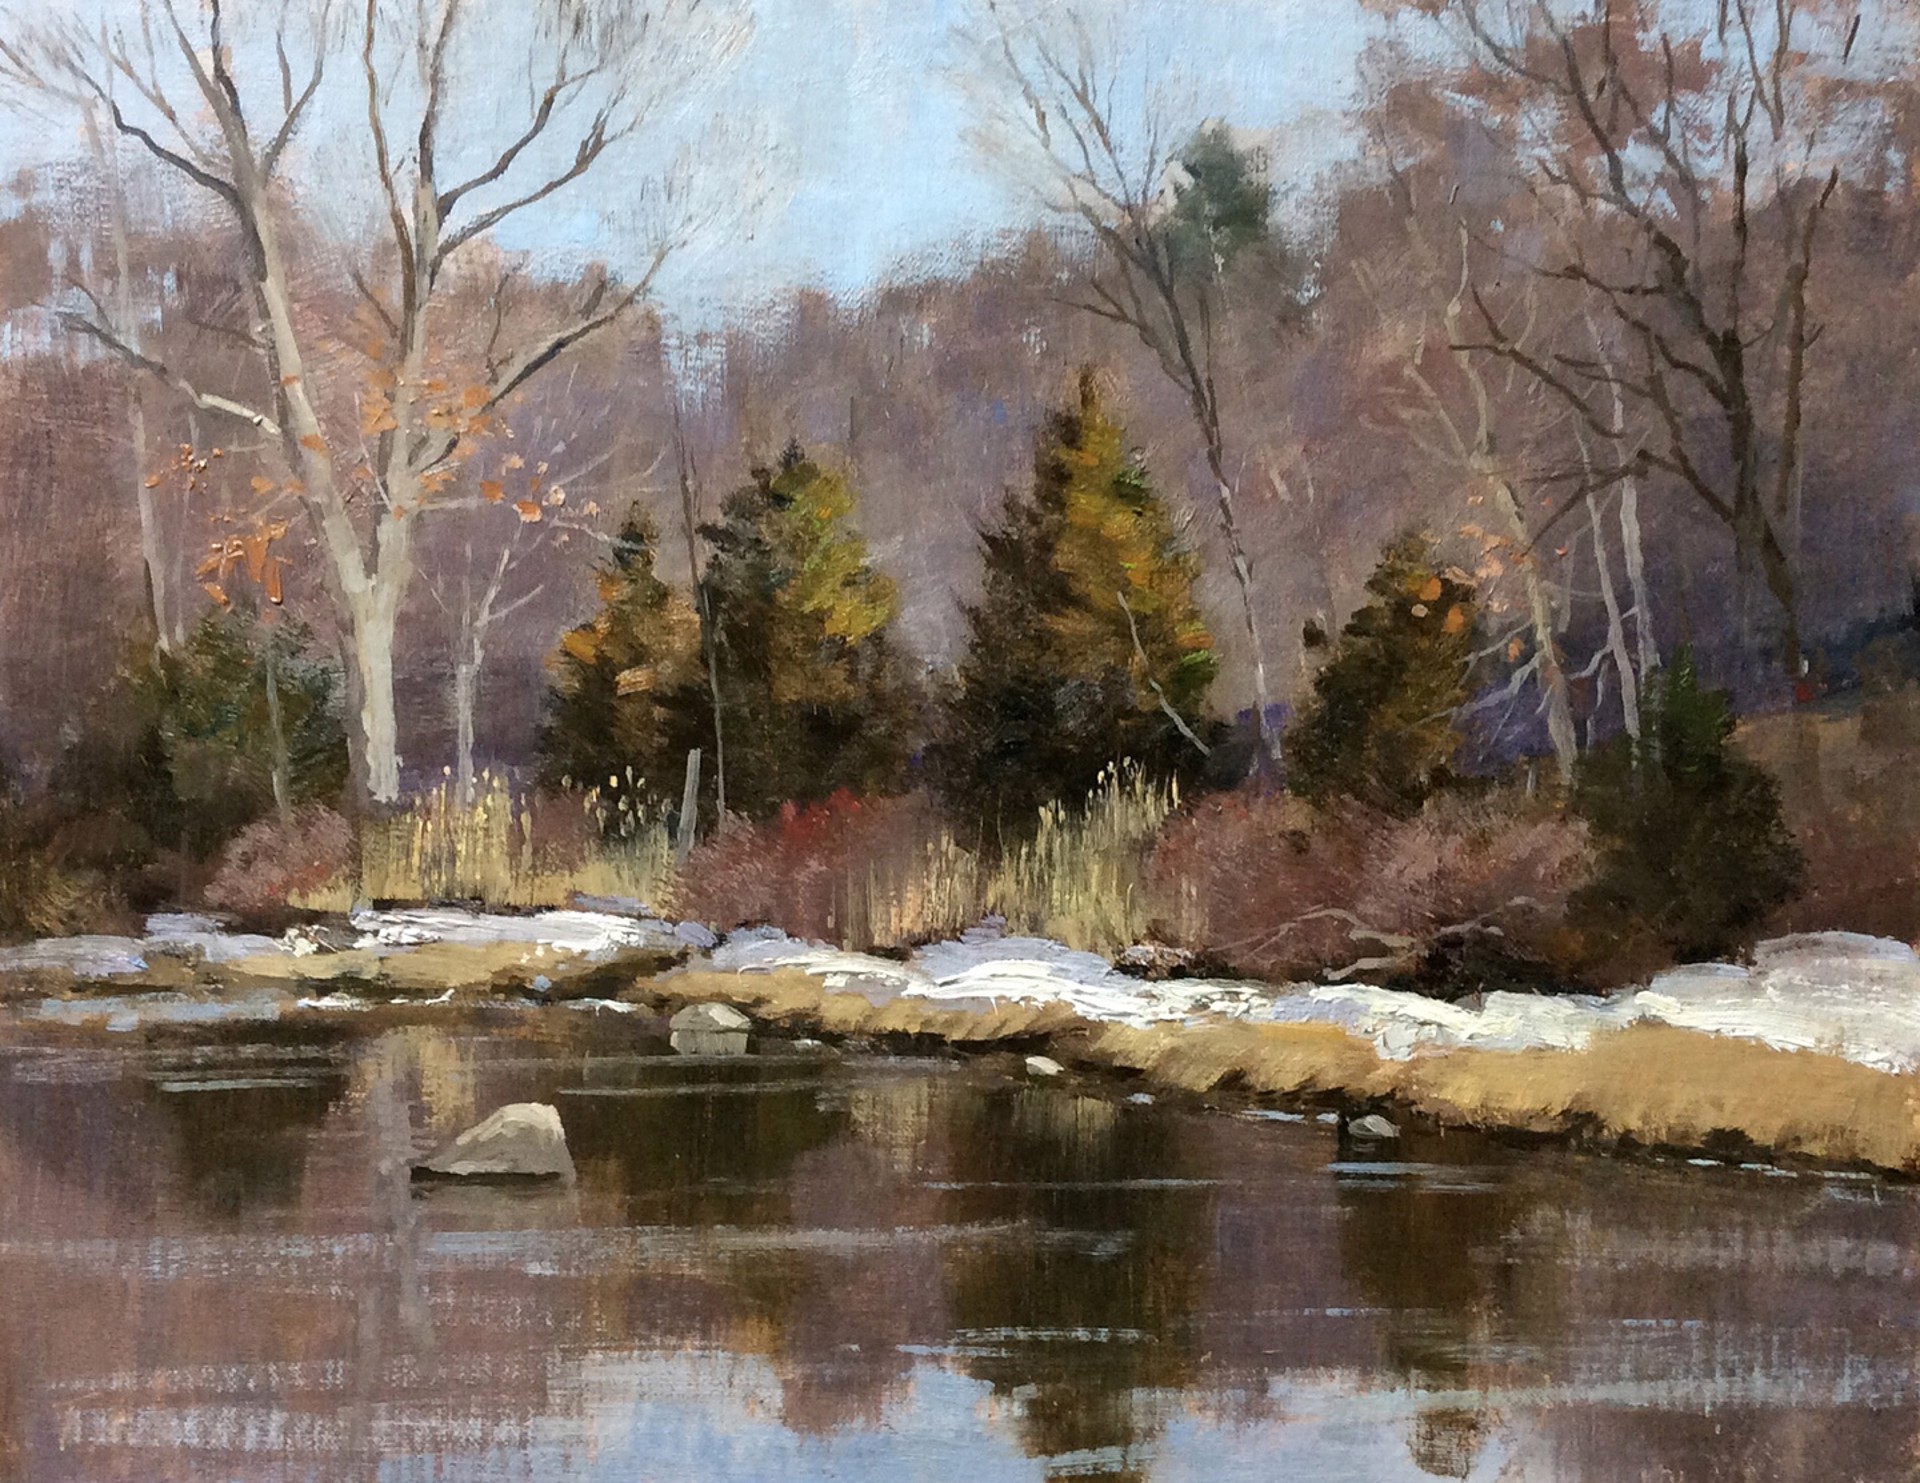 River Bank Cedars by Thomas Adkins